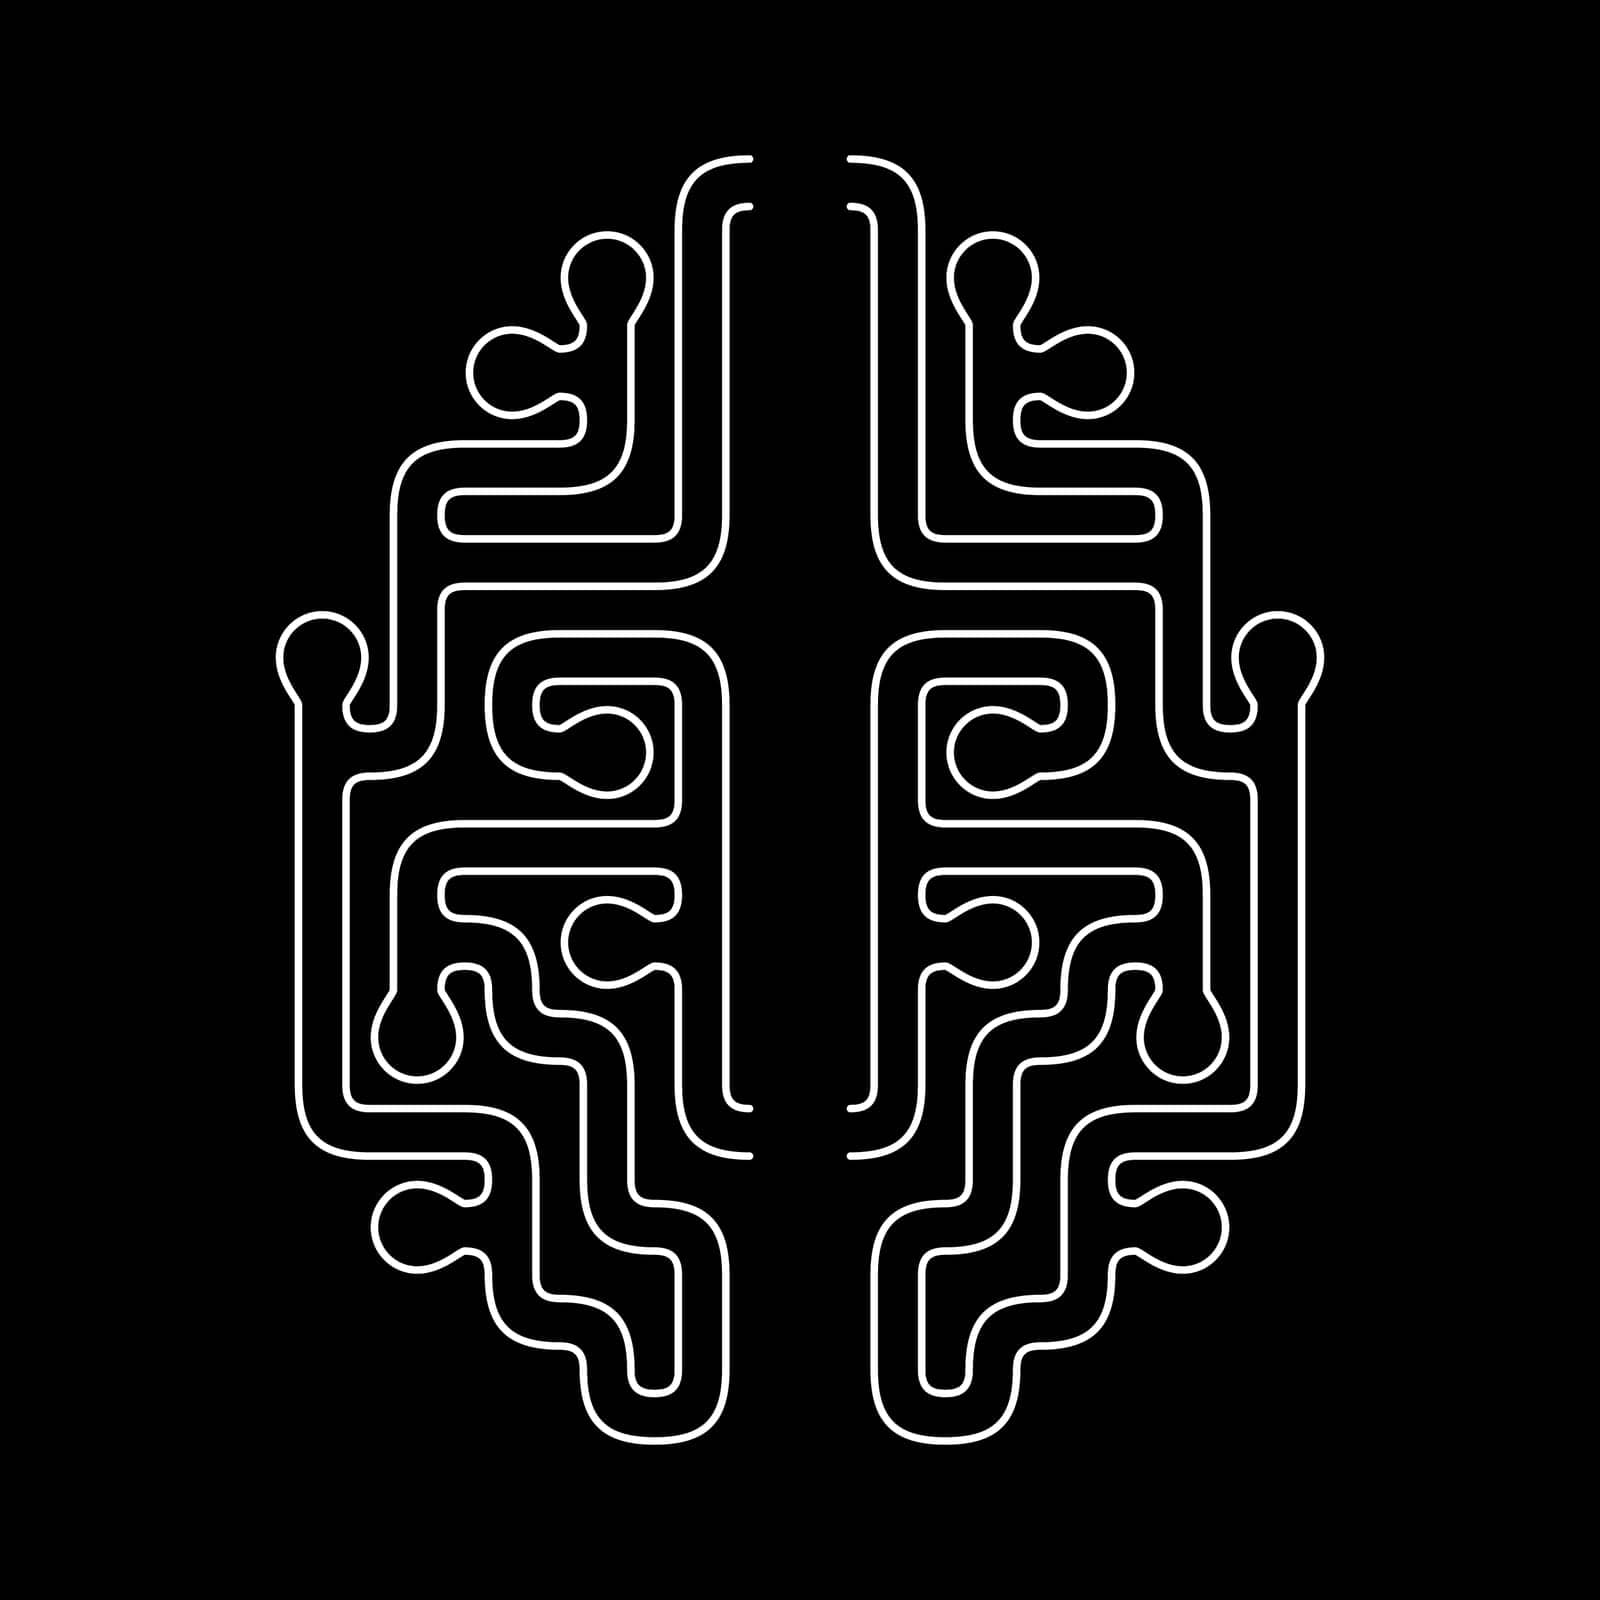 Maze or Labyrinth Geometric Vector Design. Idea or Making Decision Concept